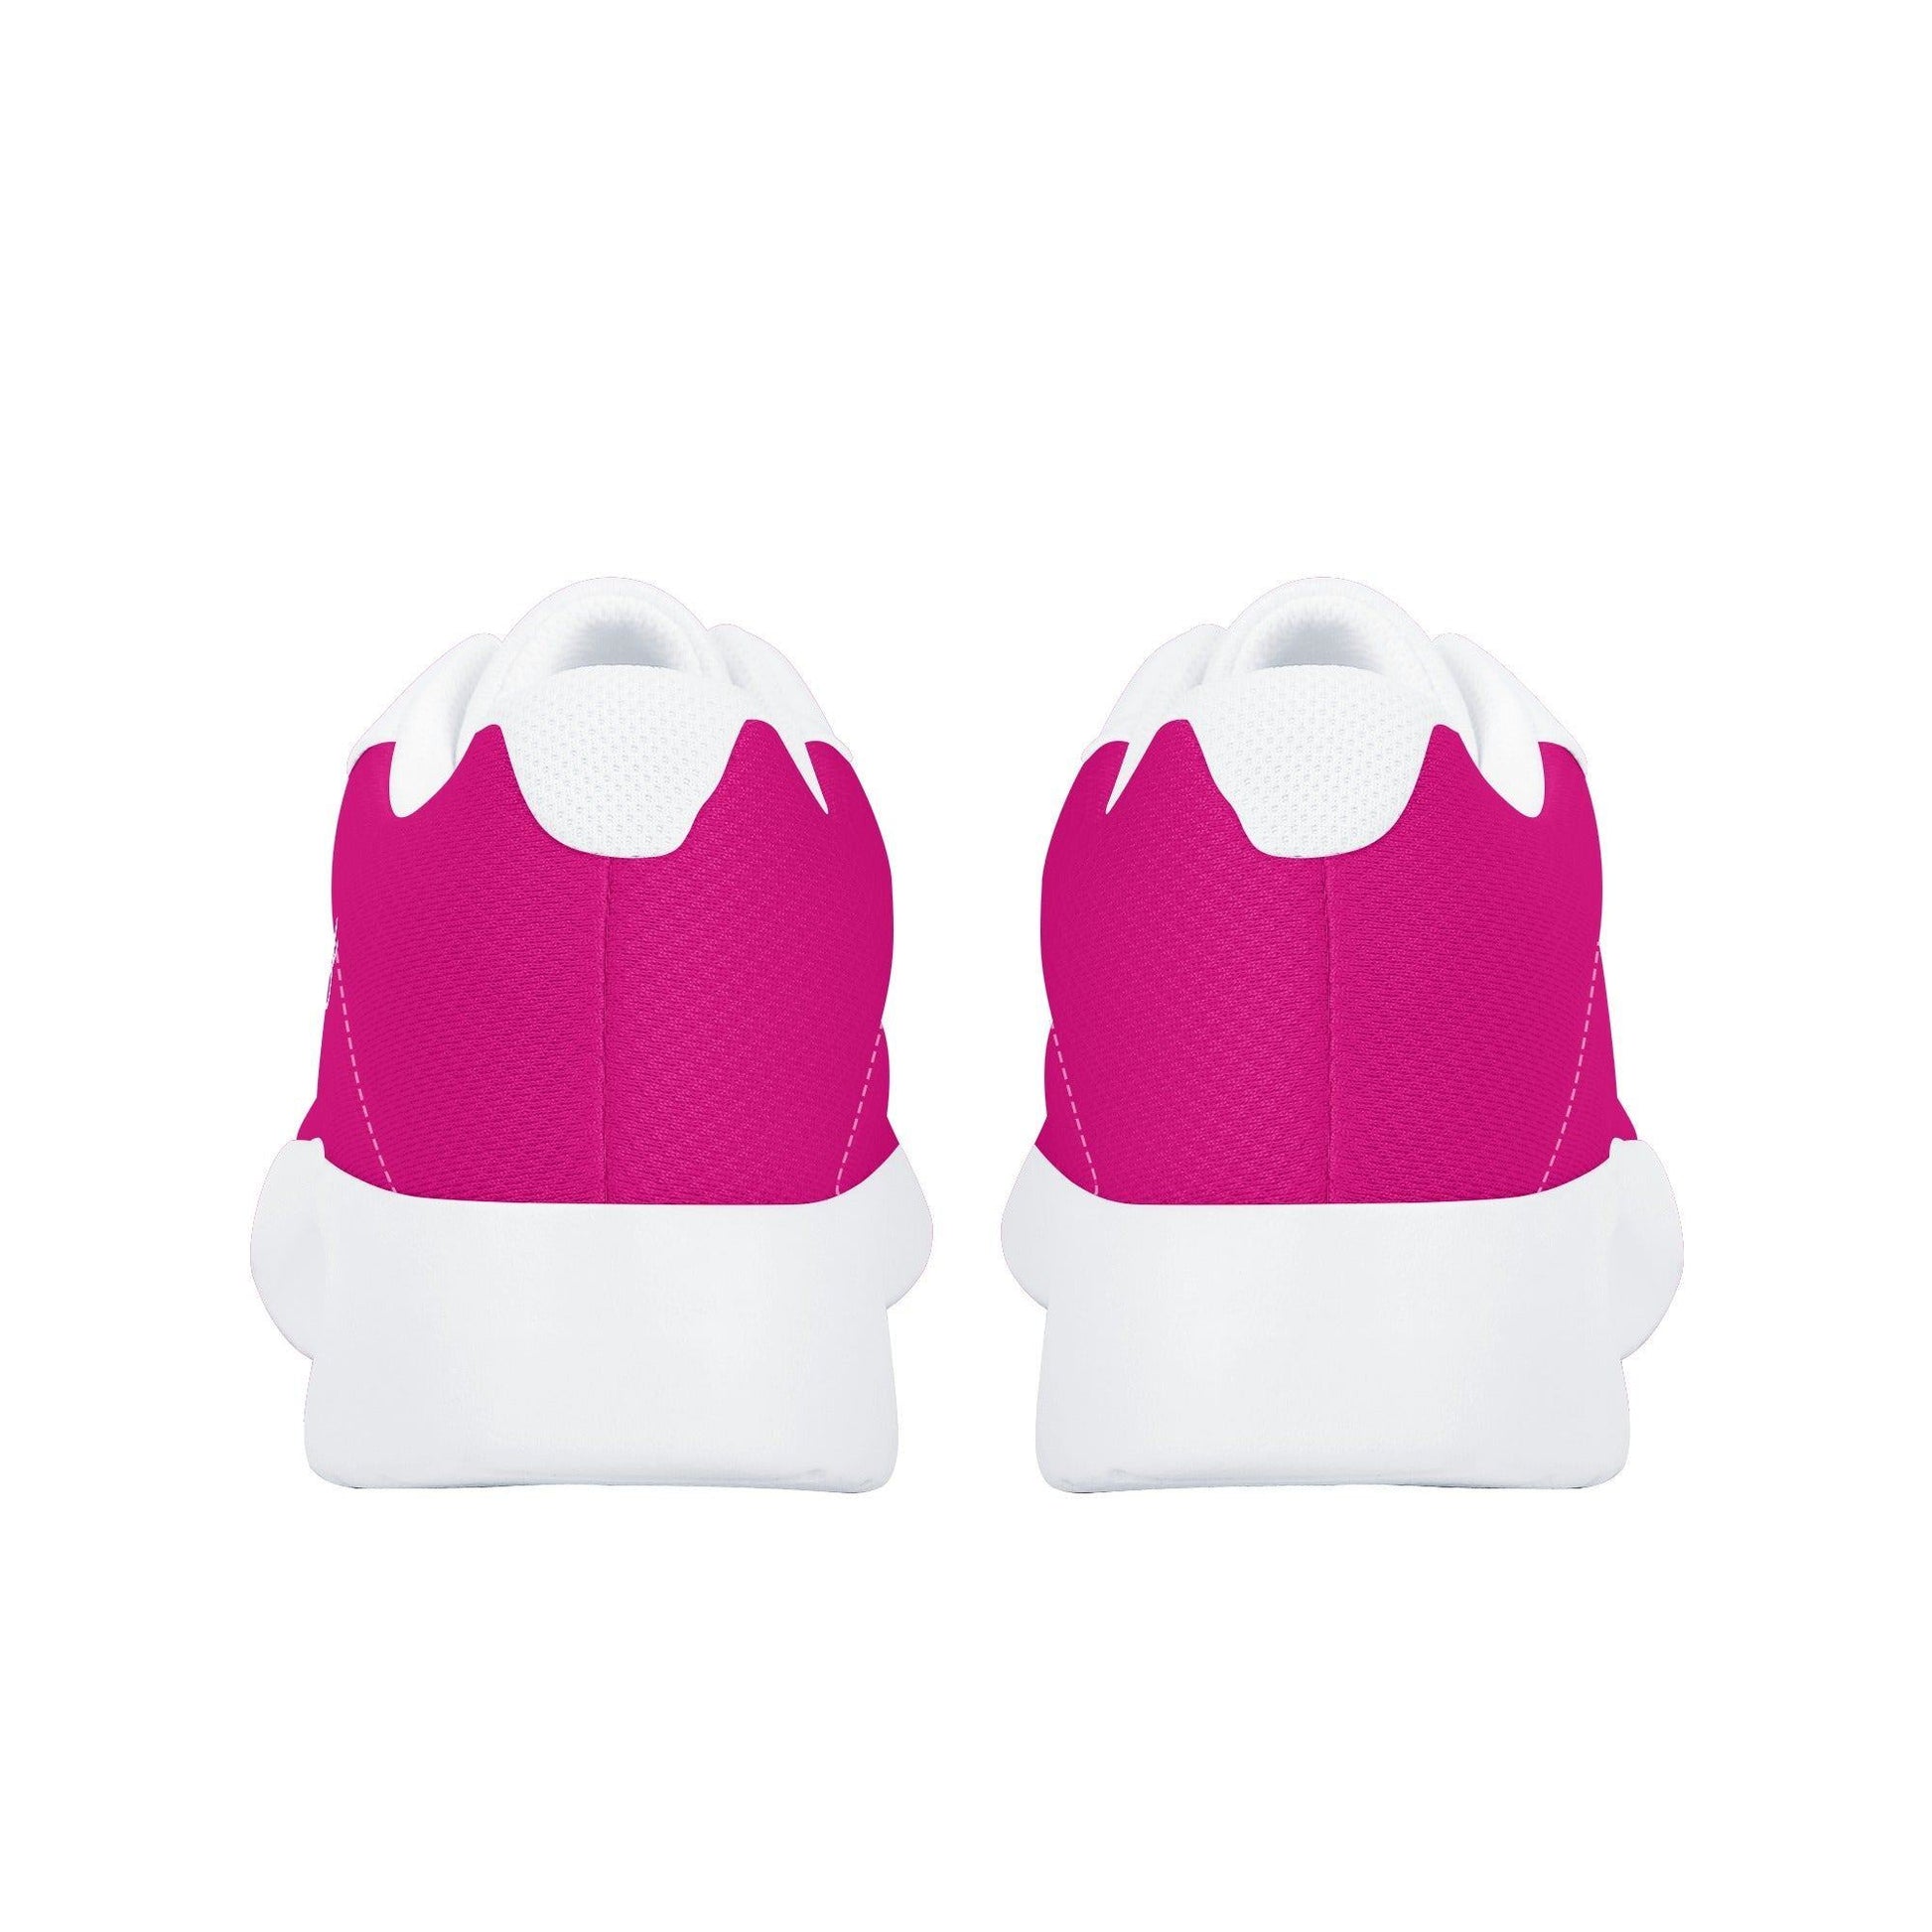 Pinke Damen Meeshy AIR Laufschuhe Laufschuhe 83.99 AIR, Damen, Laufschuhe, Medium, Meeshy, Red, Violet JLR Design